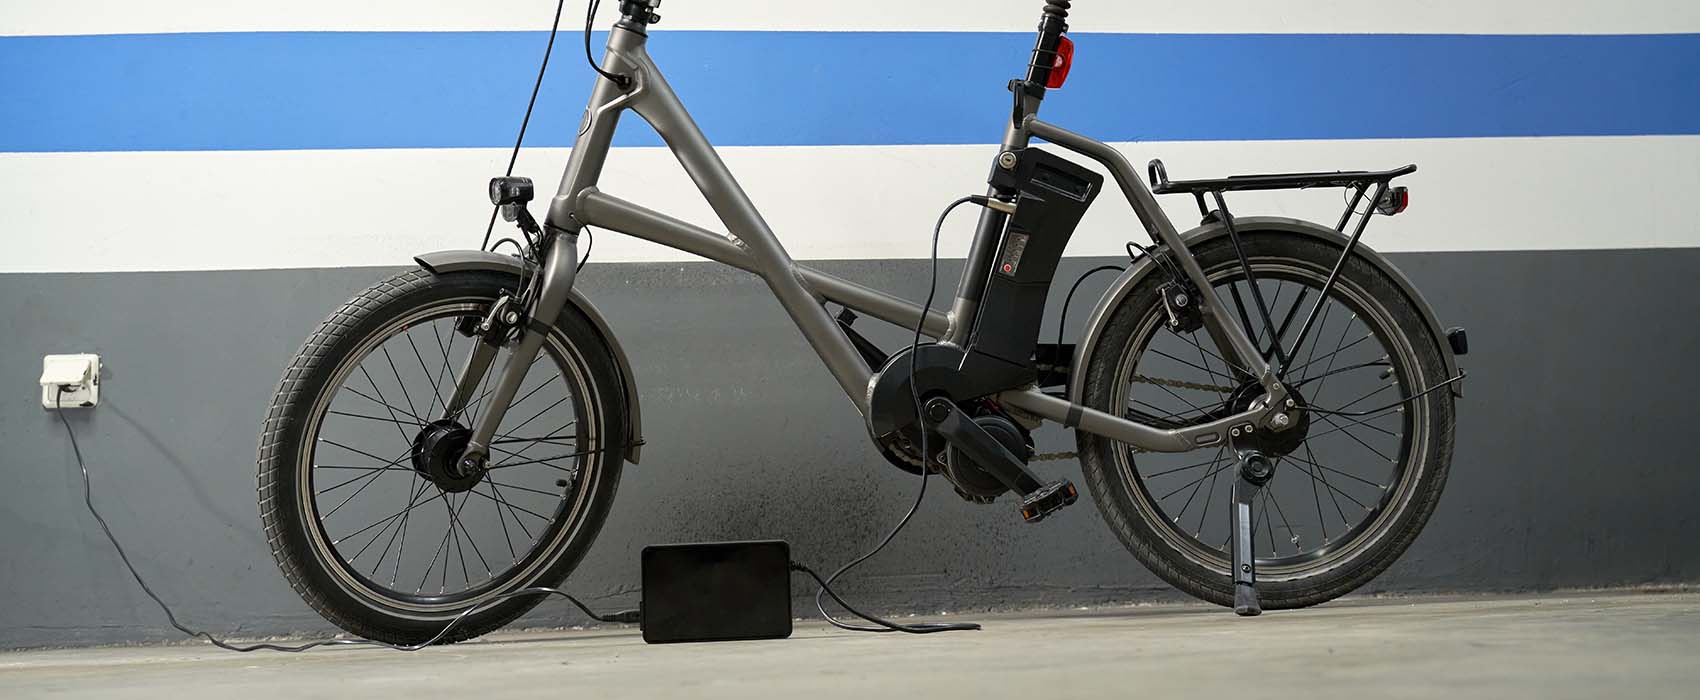 E-bike plugged into wall charging